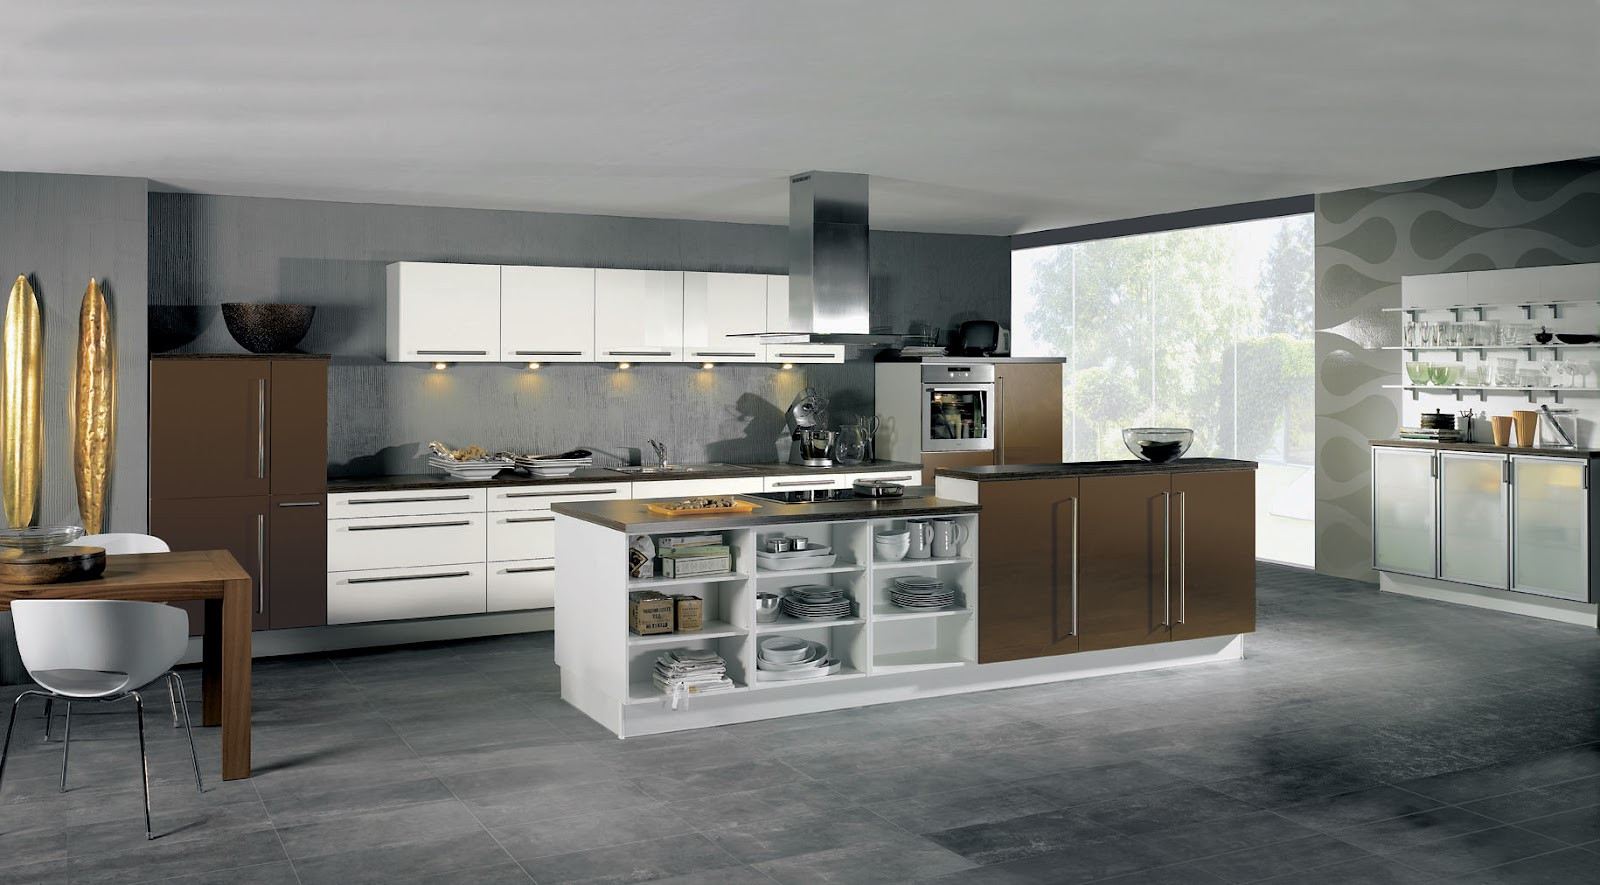 Kitchen Wall Designs
 Home Interior Design & Decor Inspirational Kitchen